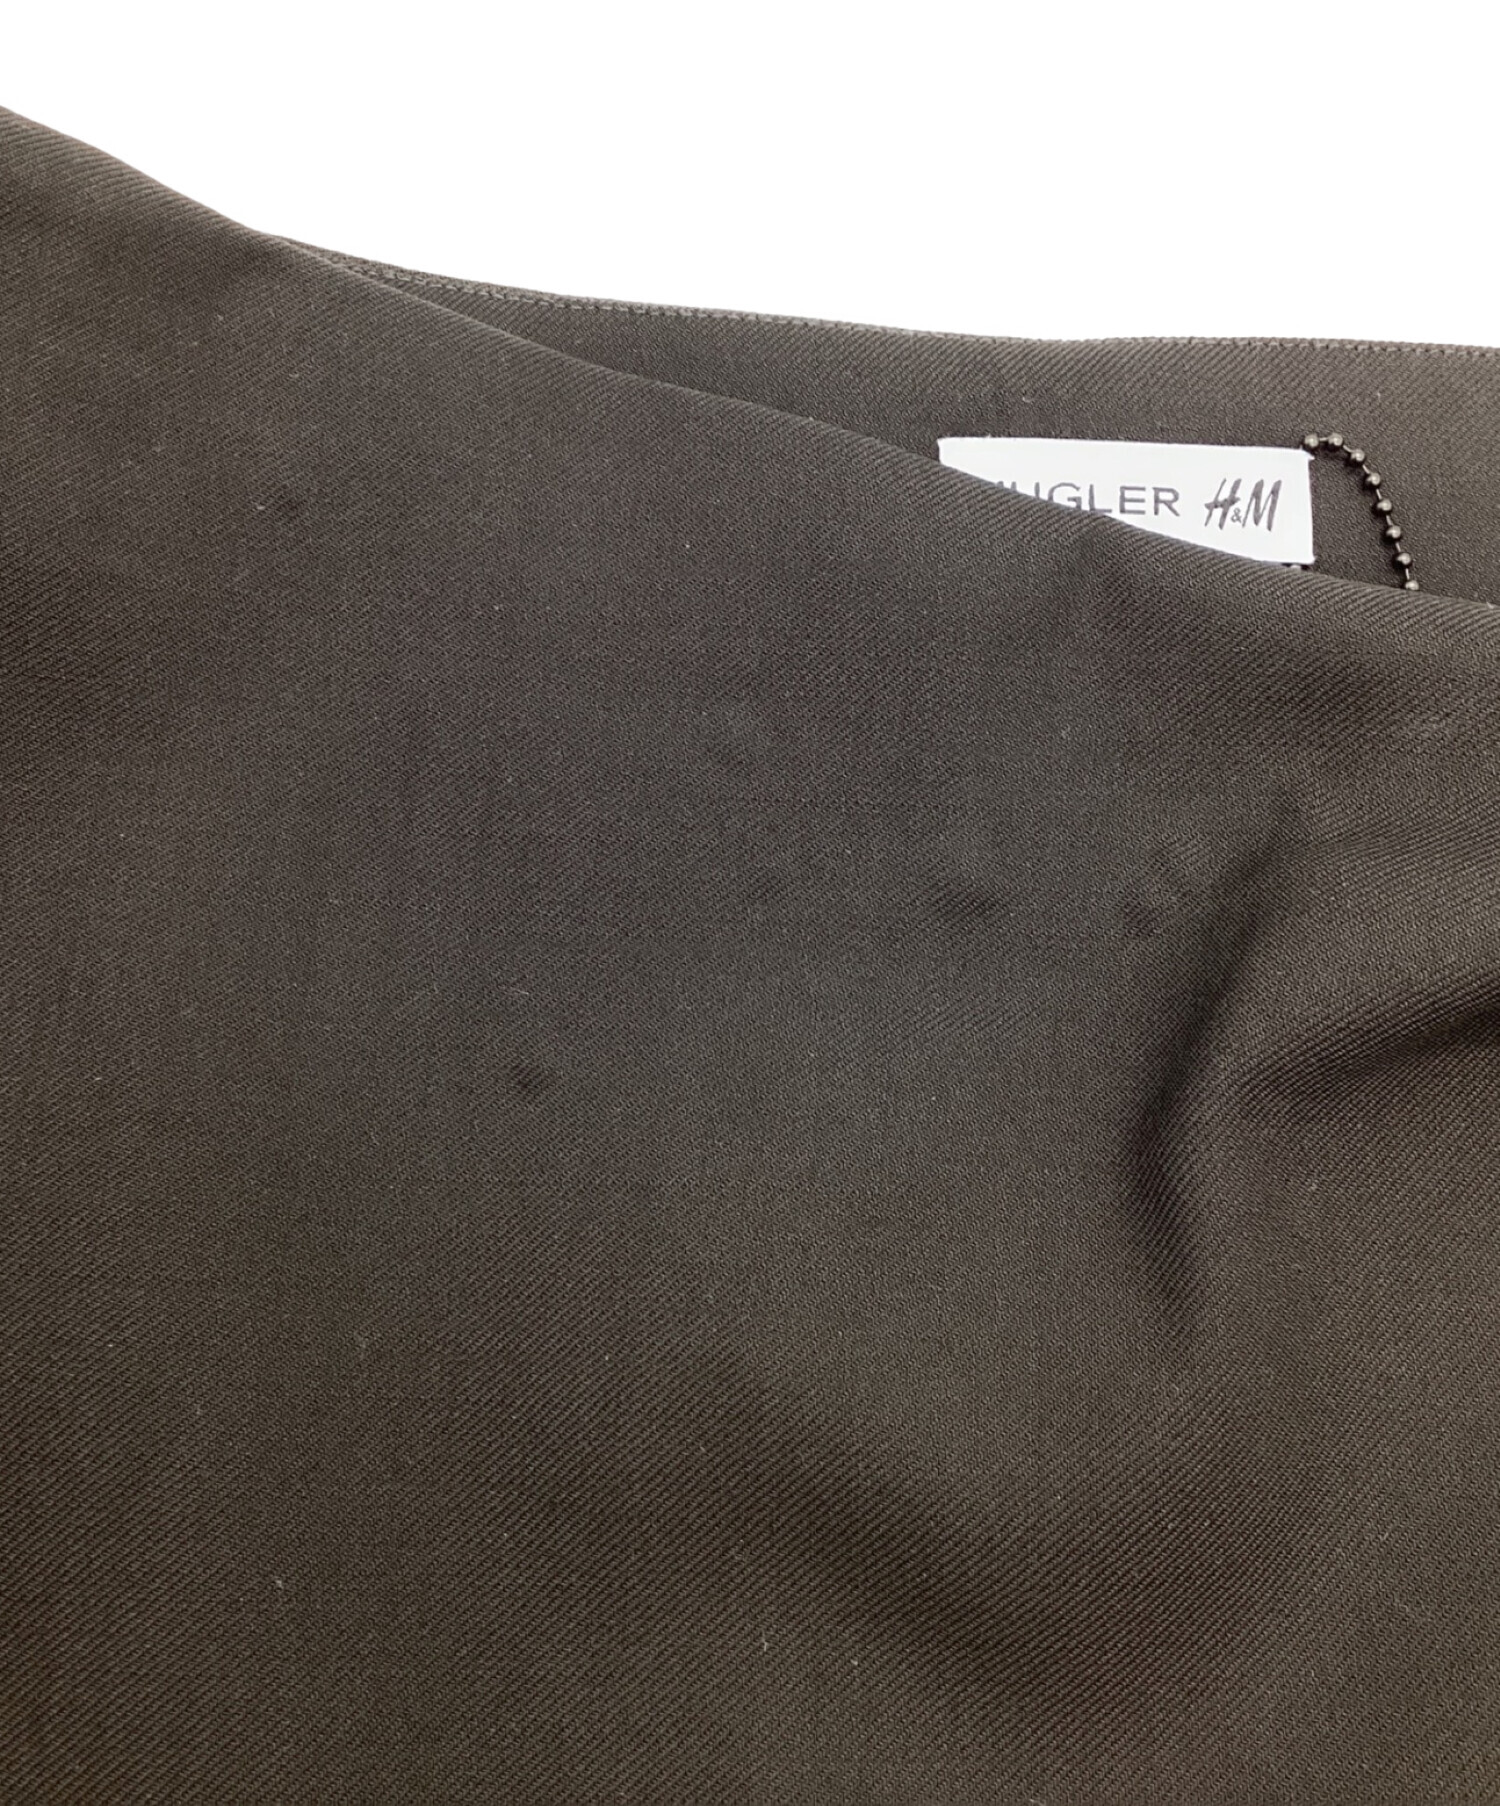 H&M (エイチアンドエム) MUGLER (ミュグレー) ミニスカート ブラック サイズ:38